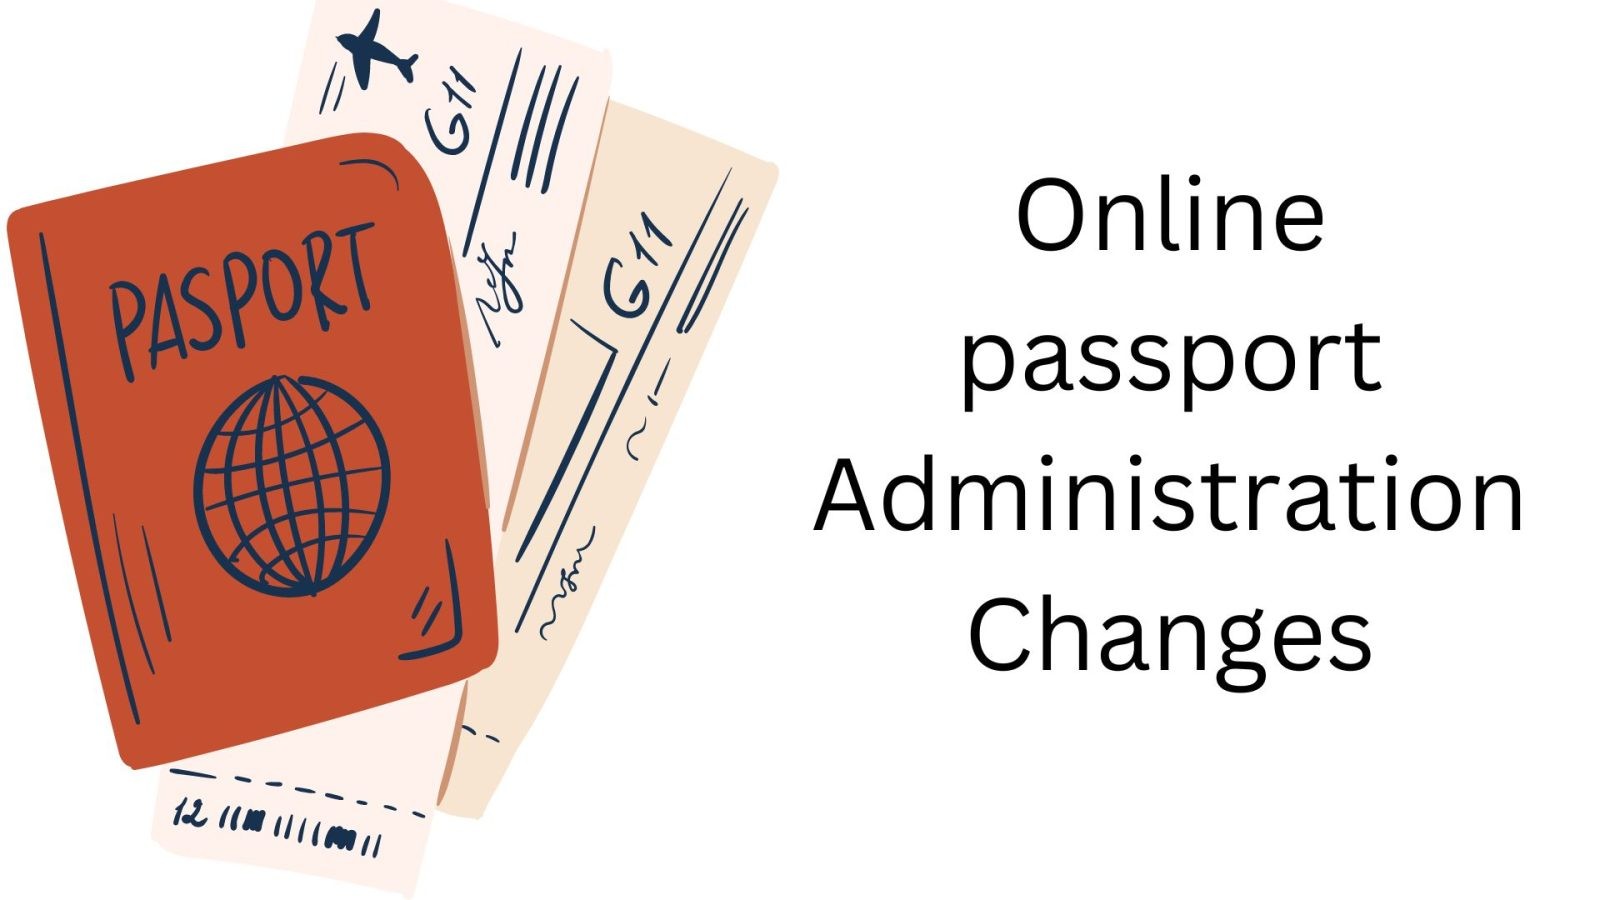 Online passport Administration Changes (1)